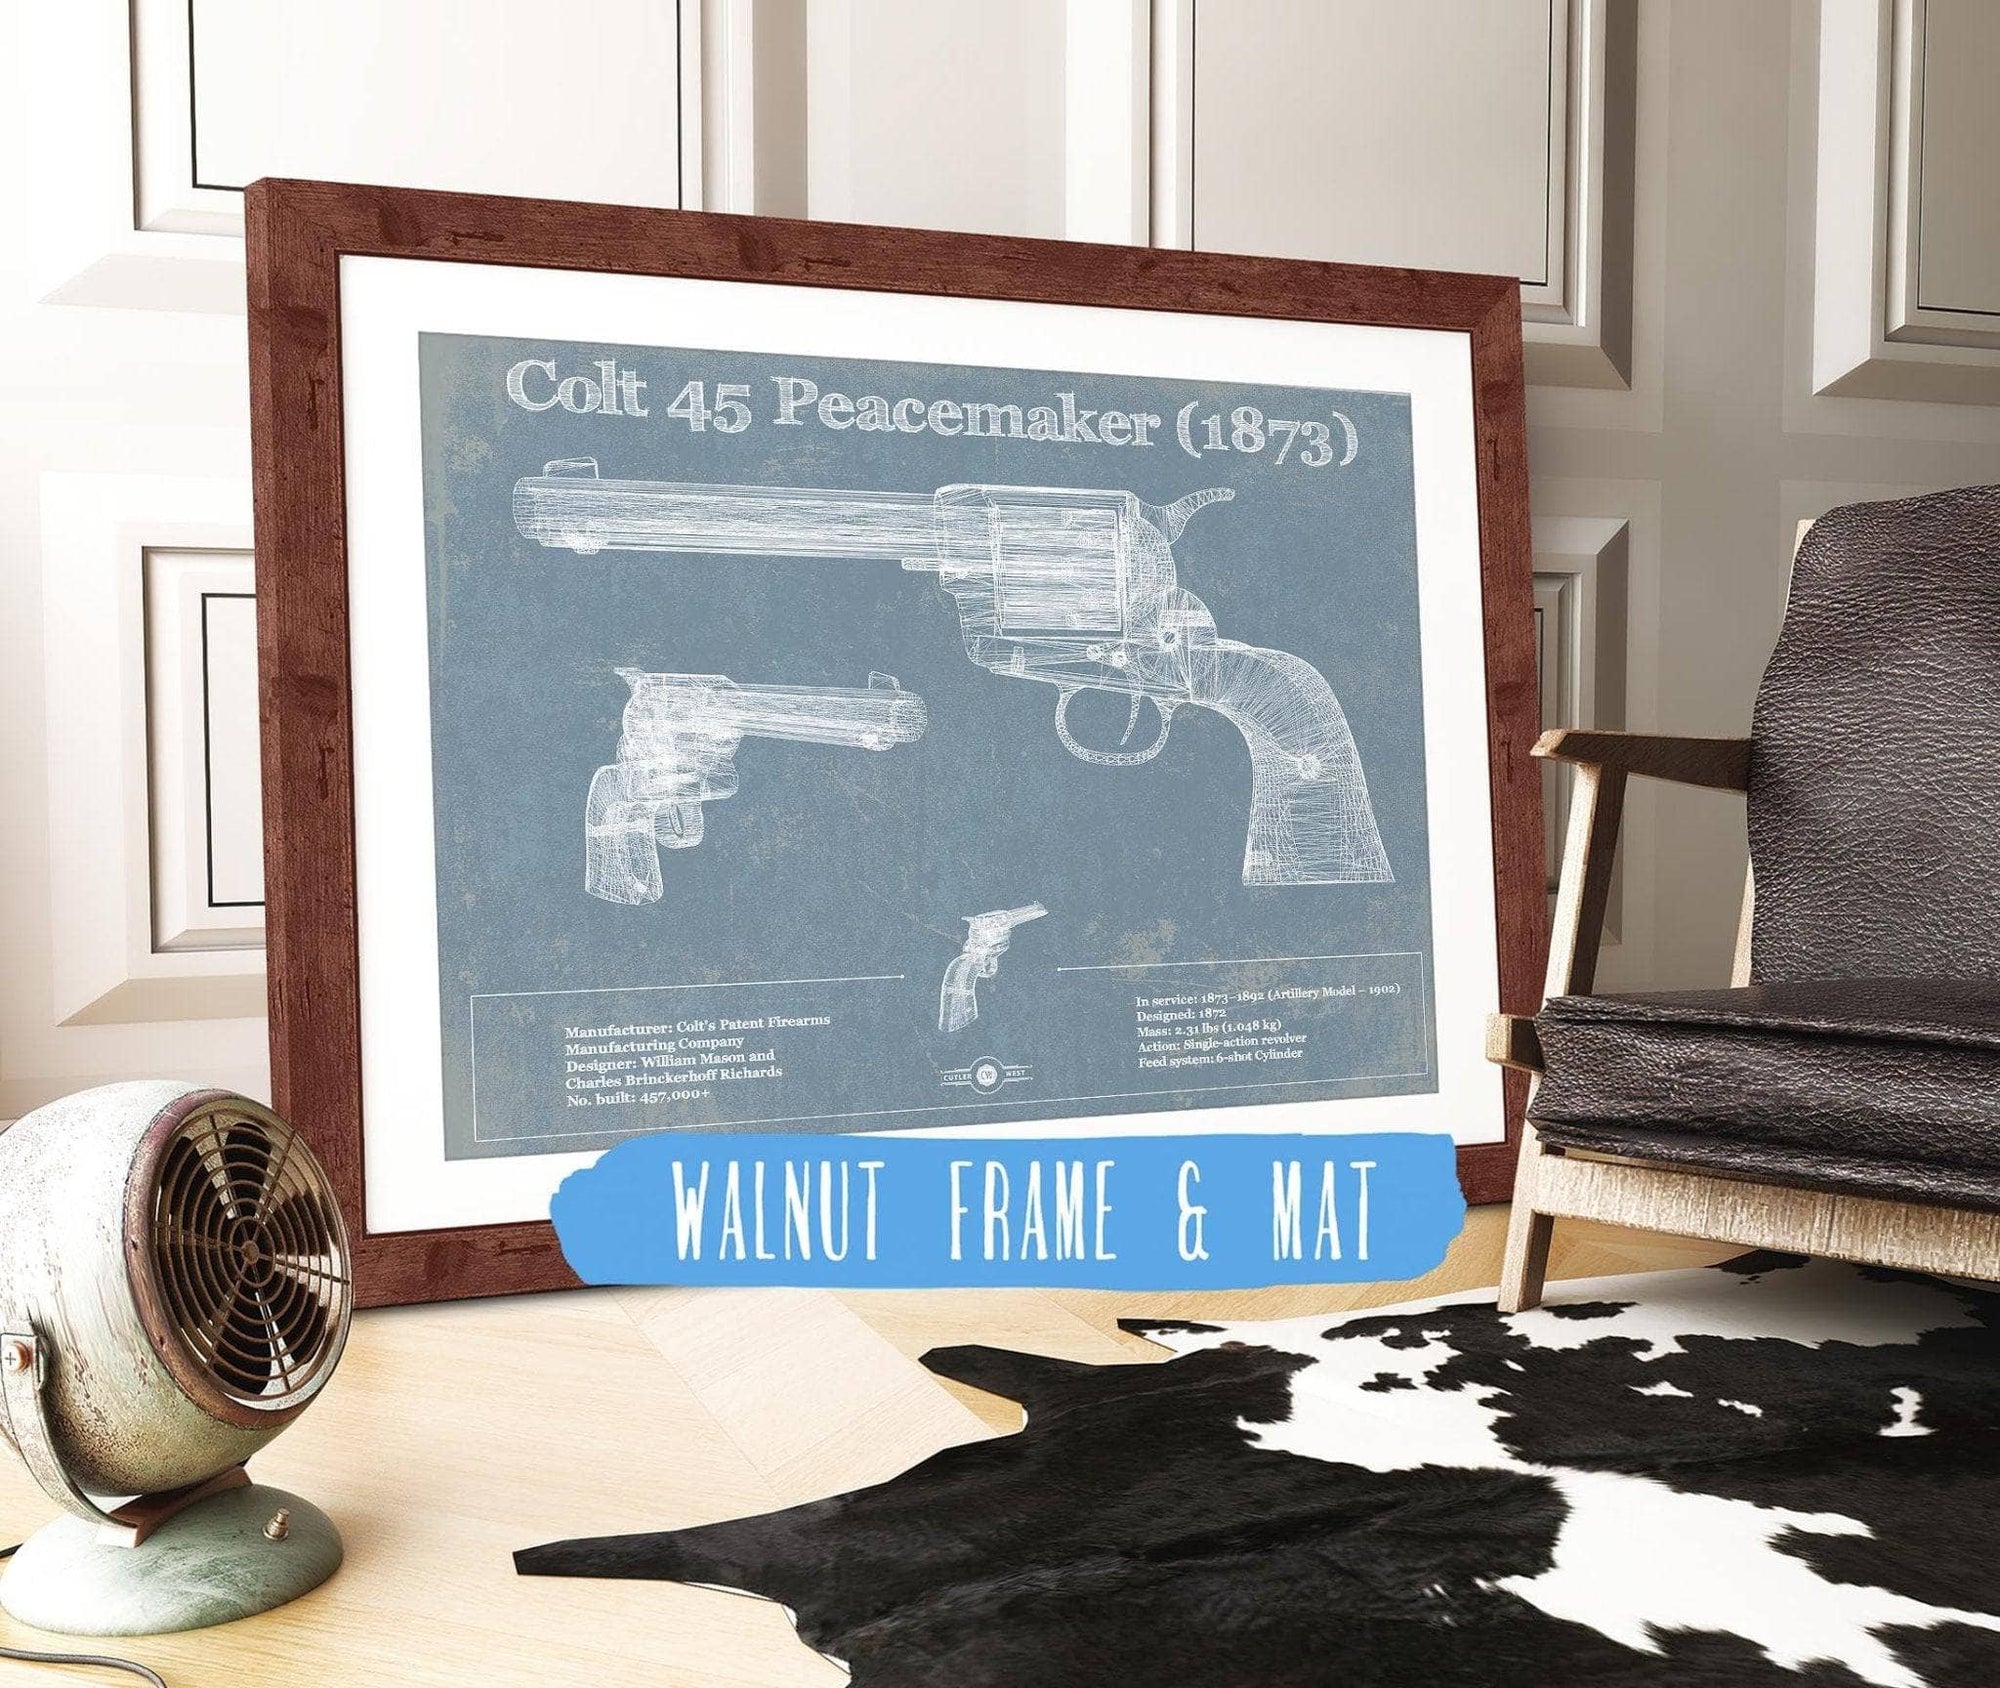 Cutler West Military Weapons Collection 14" x 11" / Walnut Frame & Mat Colt 45 Peacemaker 1873 Blueprint Vintage Gun Print 892159293_54153